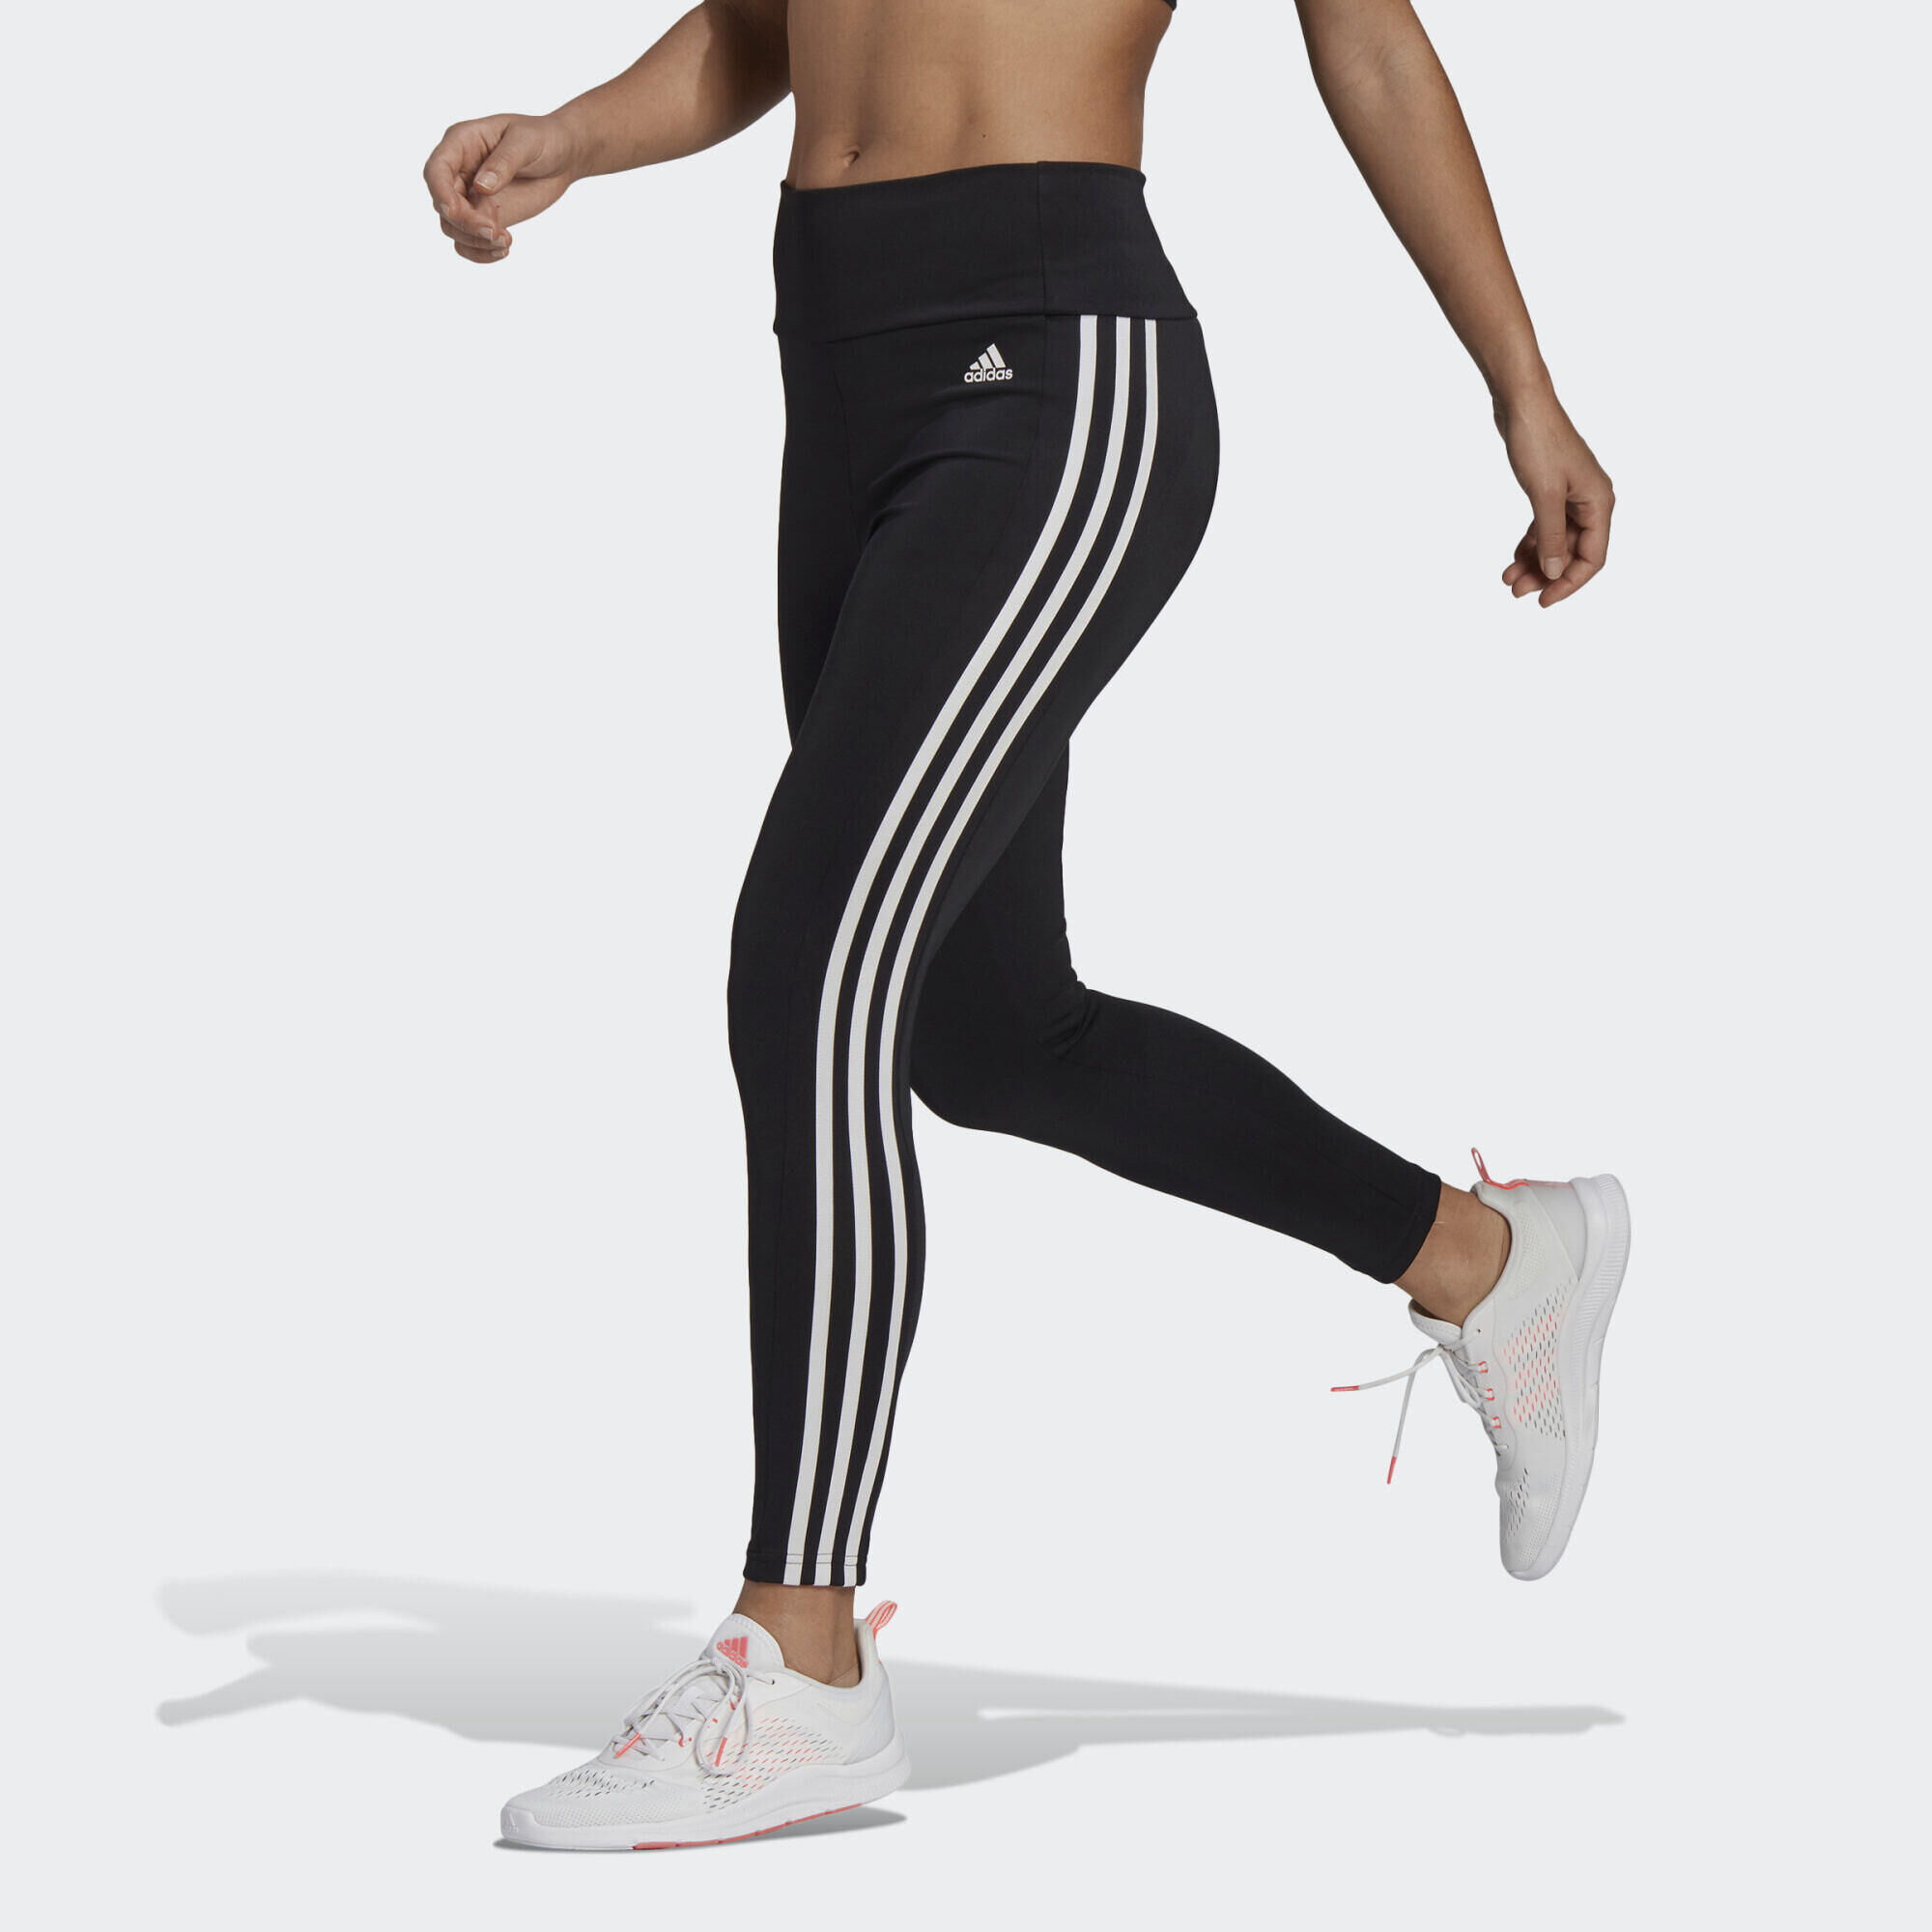 adidas Yoga Essential legging shorts in black